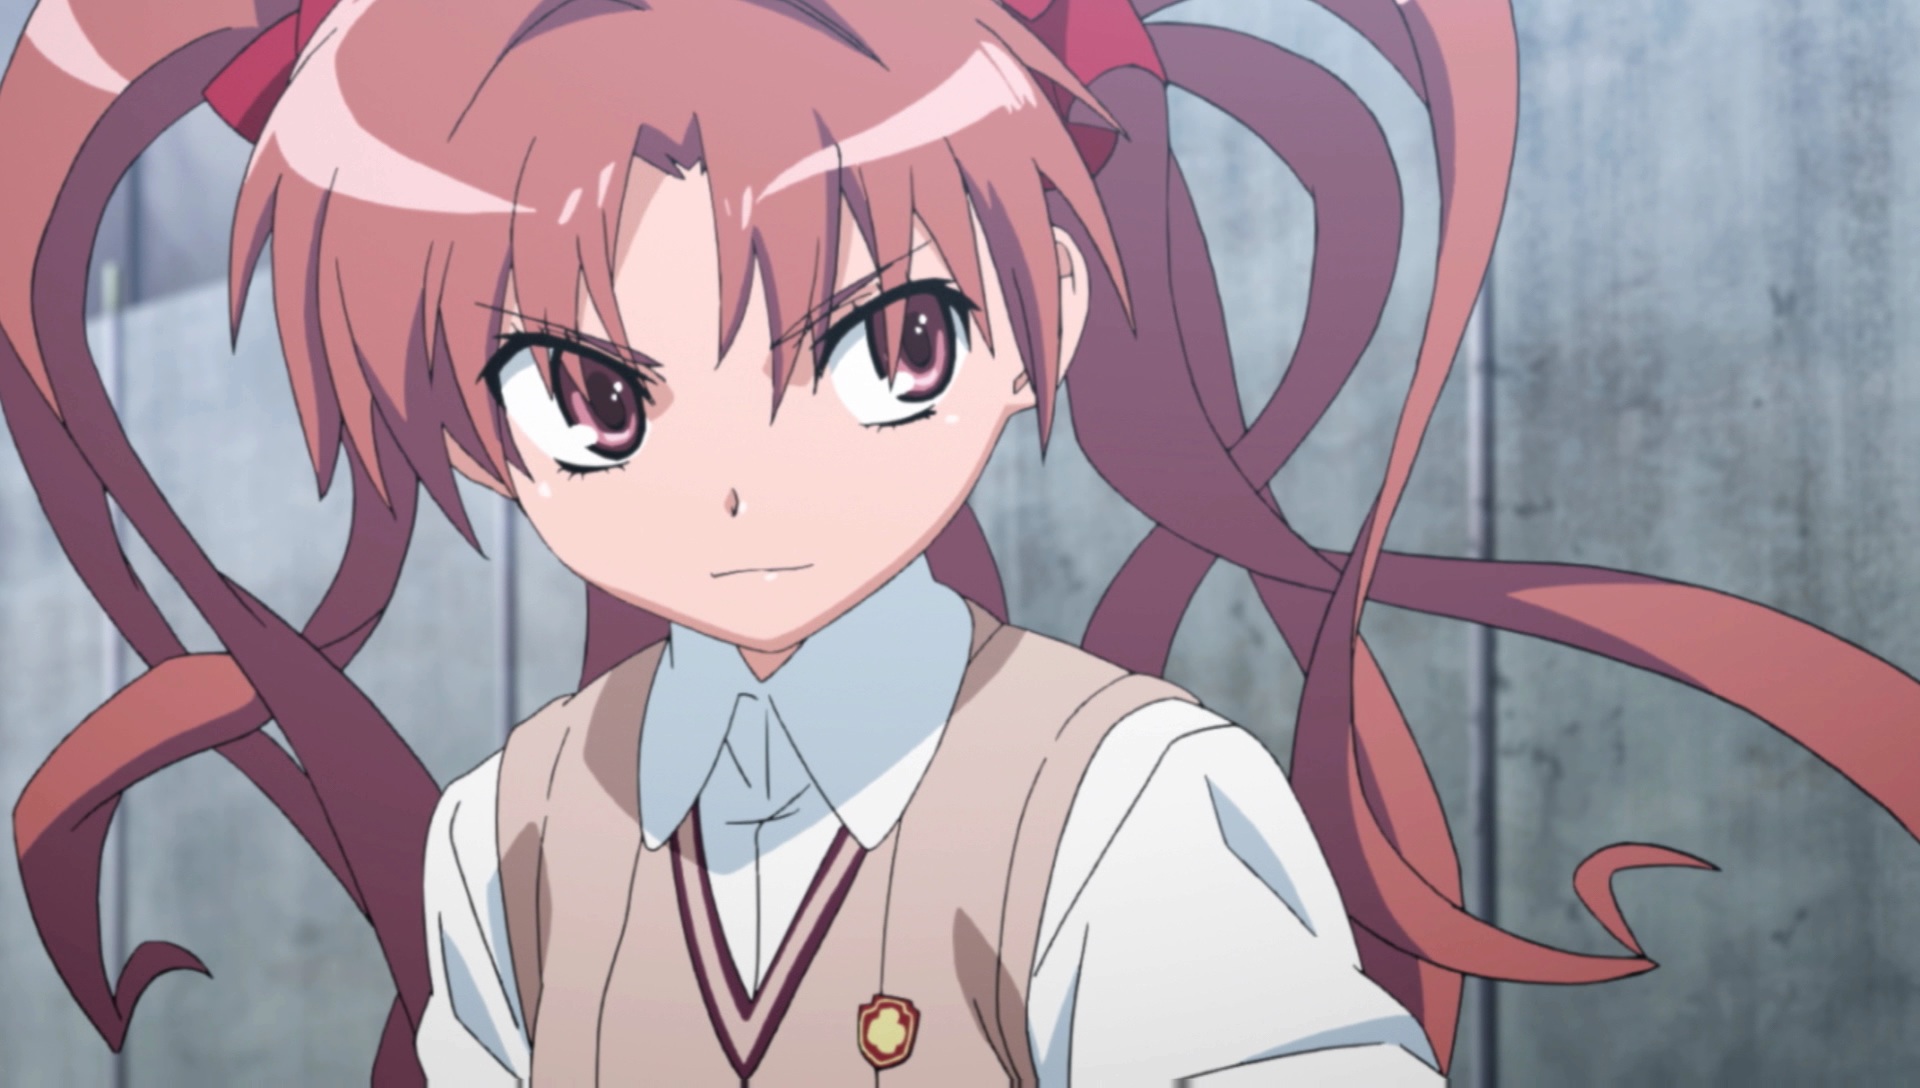 Watch A Certain Scientific Railgun Season 1 Episode 9 Sub & Dub | Anime